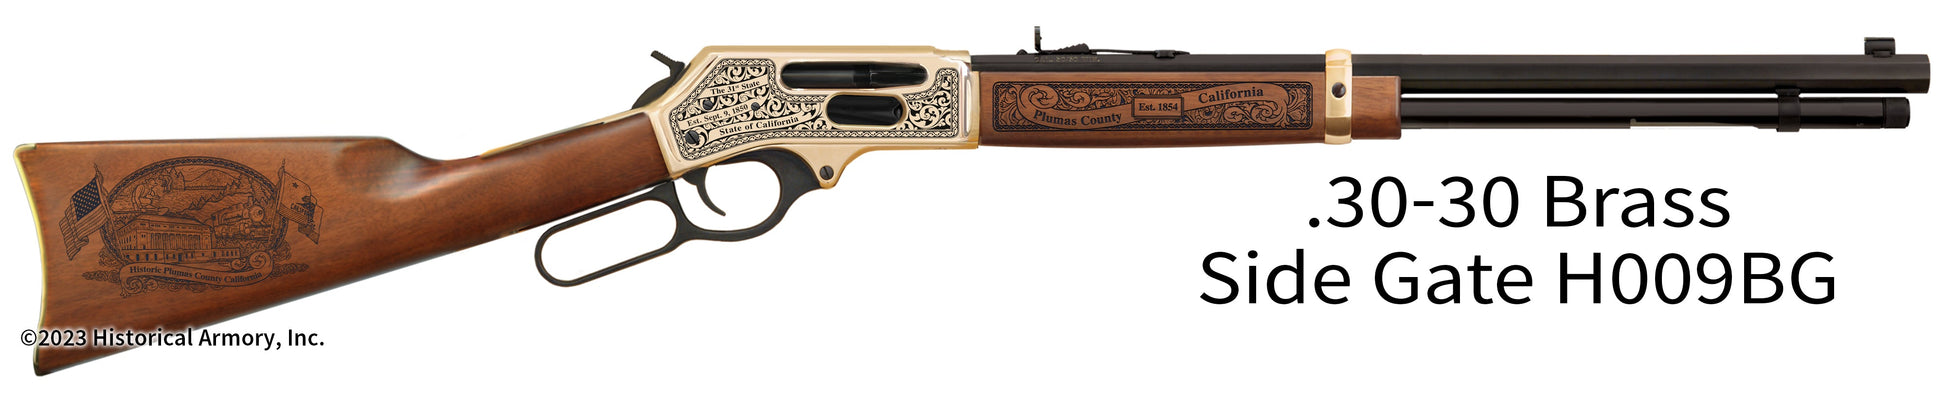 Plumas County California Engraved Henry .30-30 Brass Side Gate Rifle